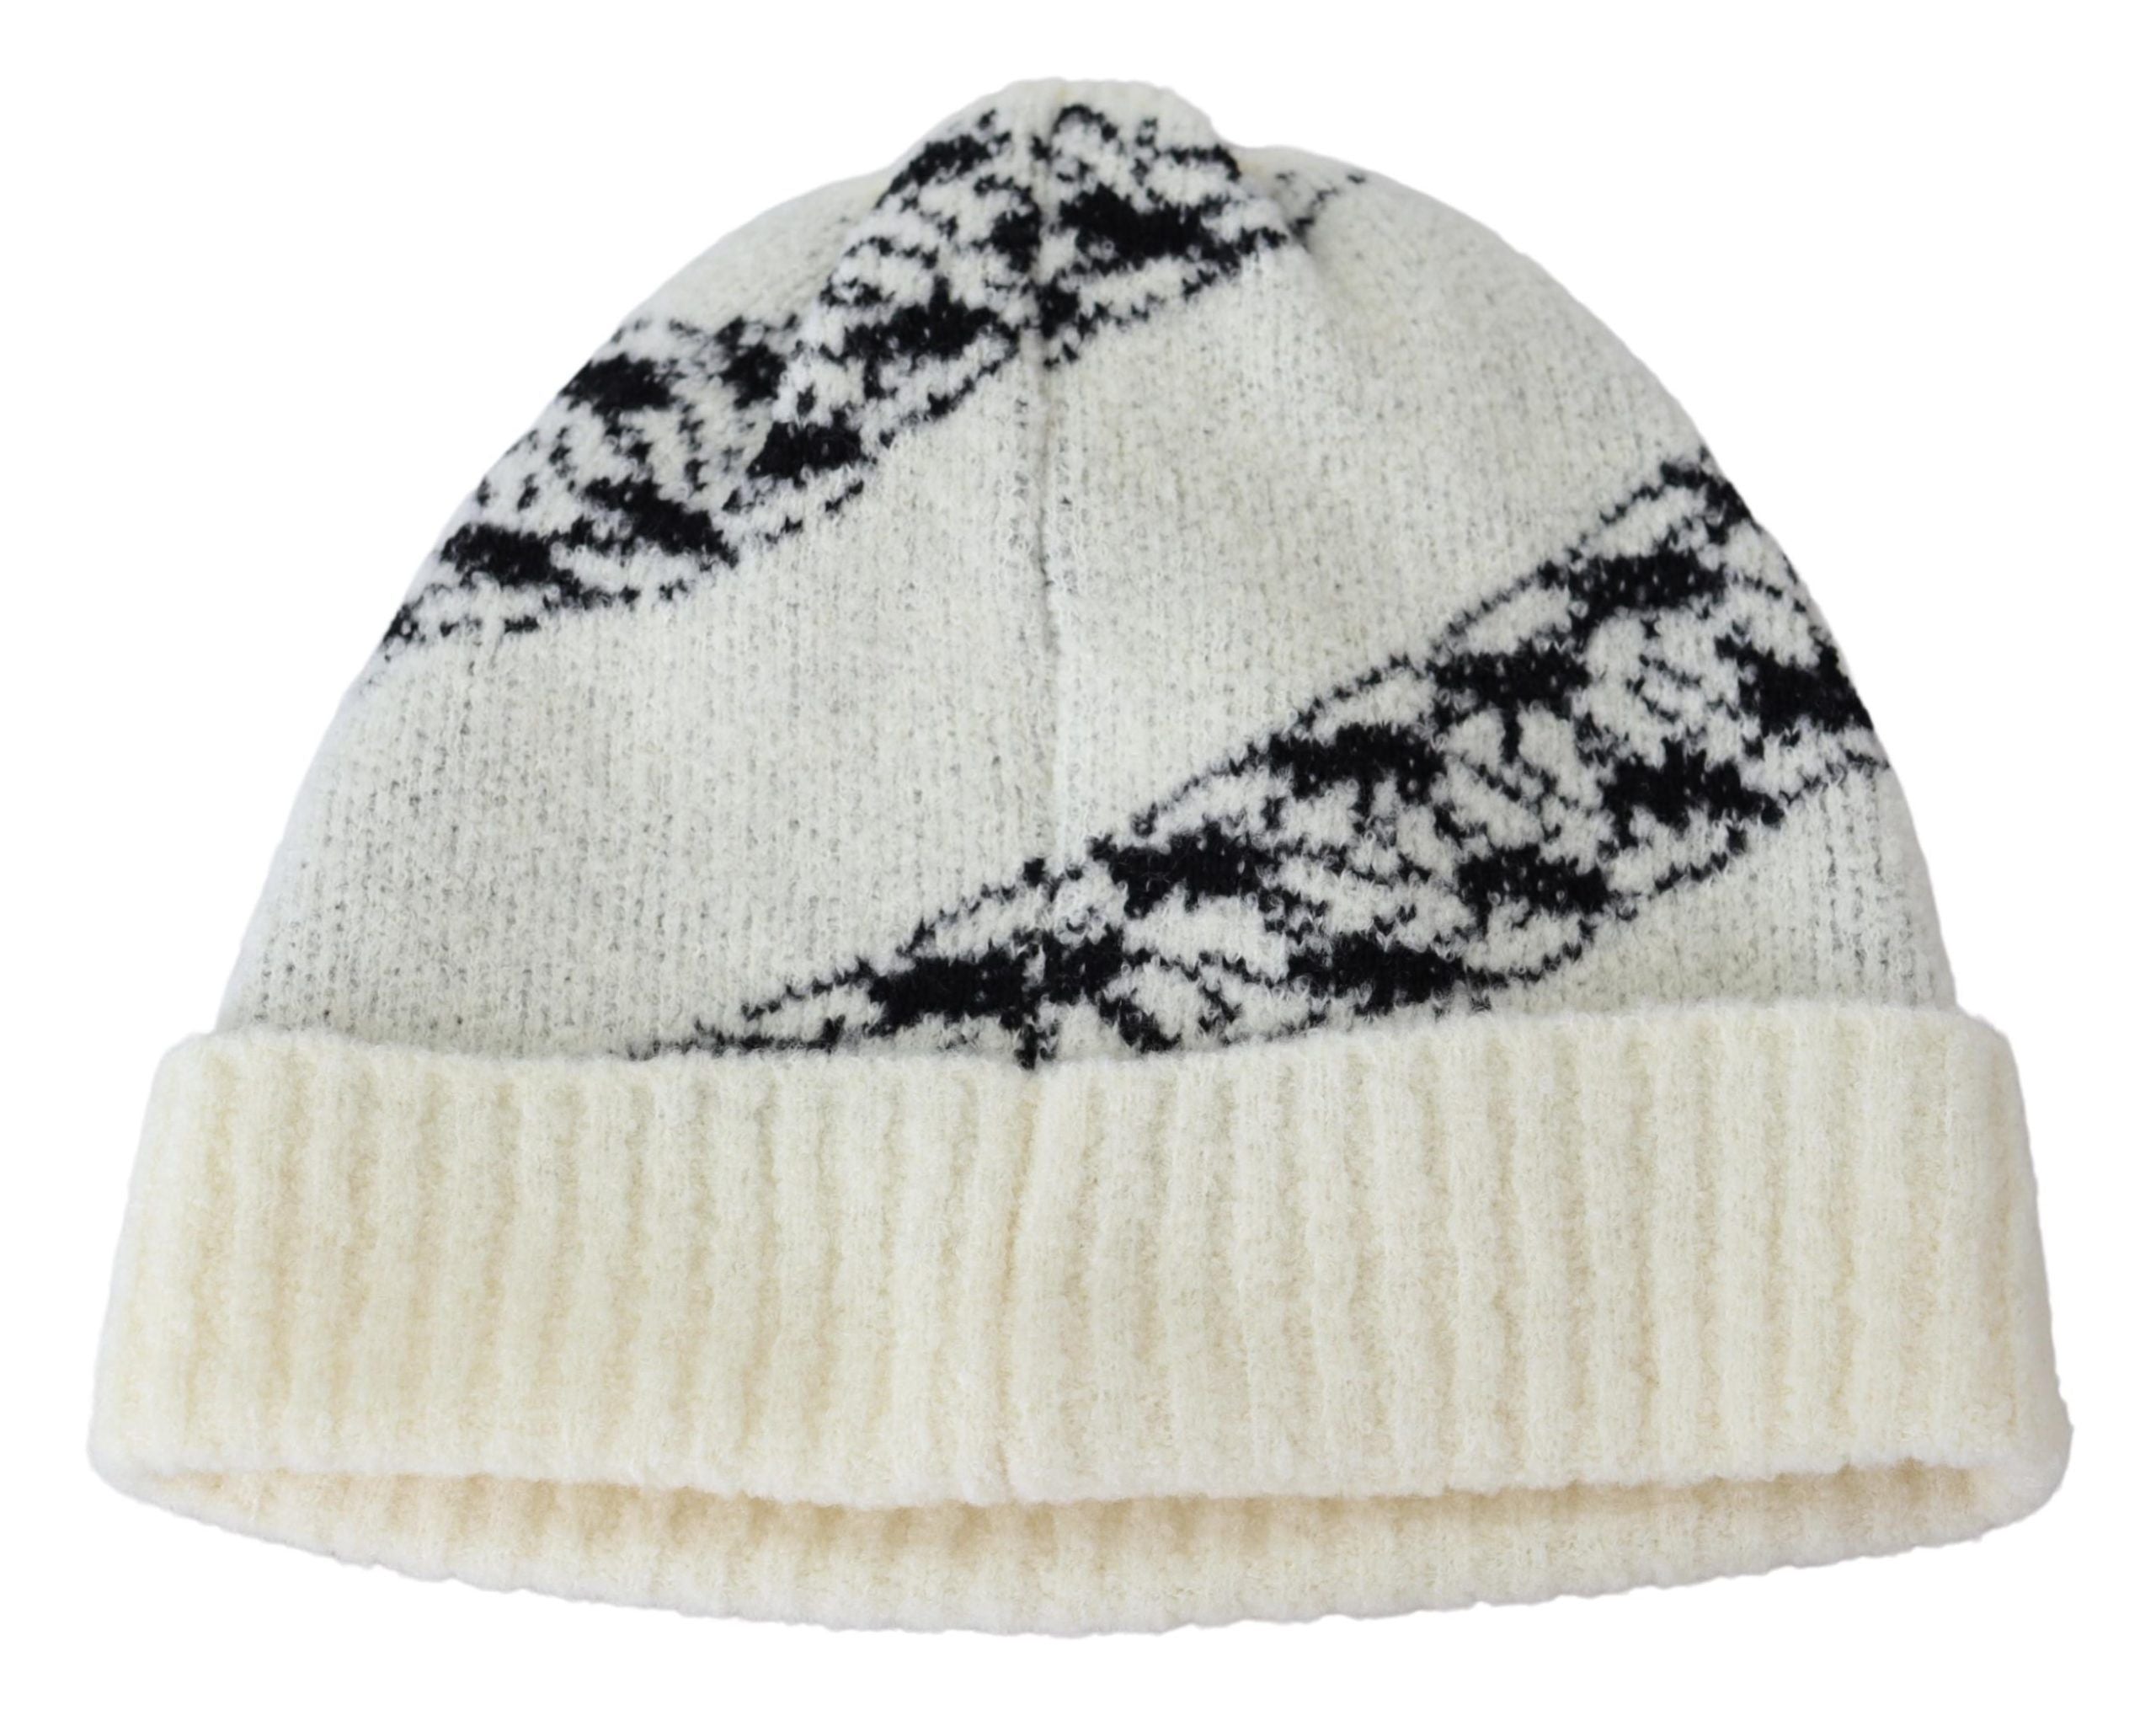 Givenchy White Wool Unisex Winter Warm Beanie  Hat